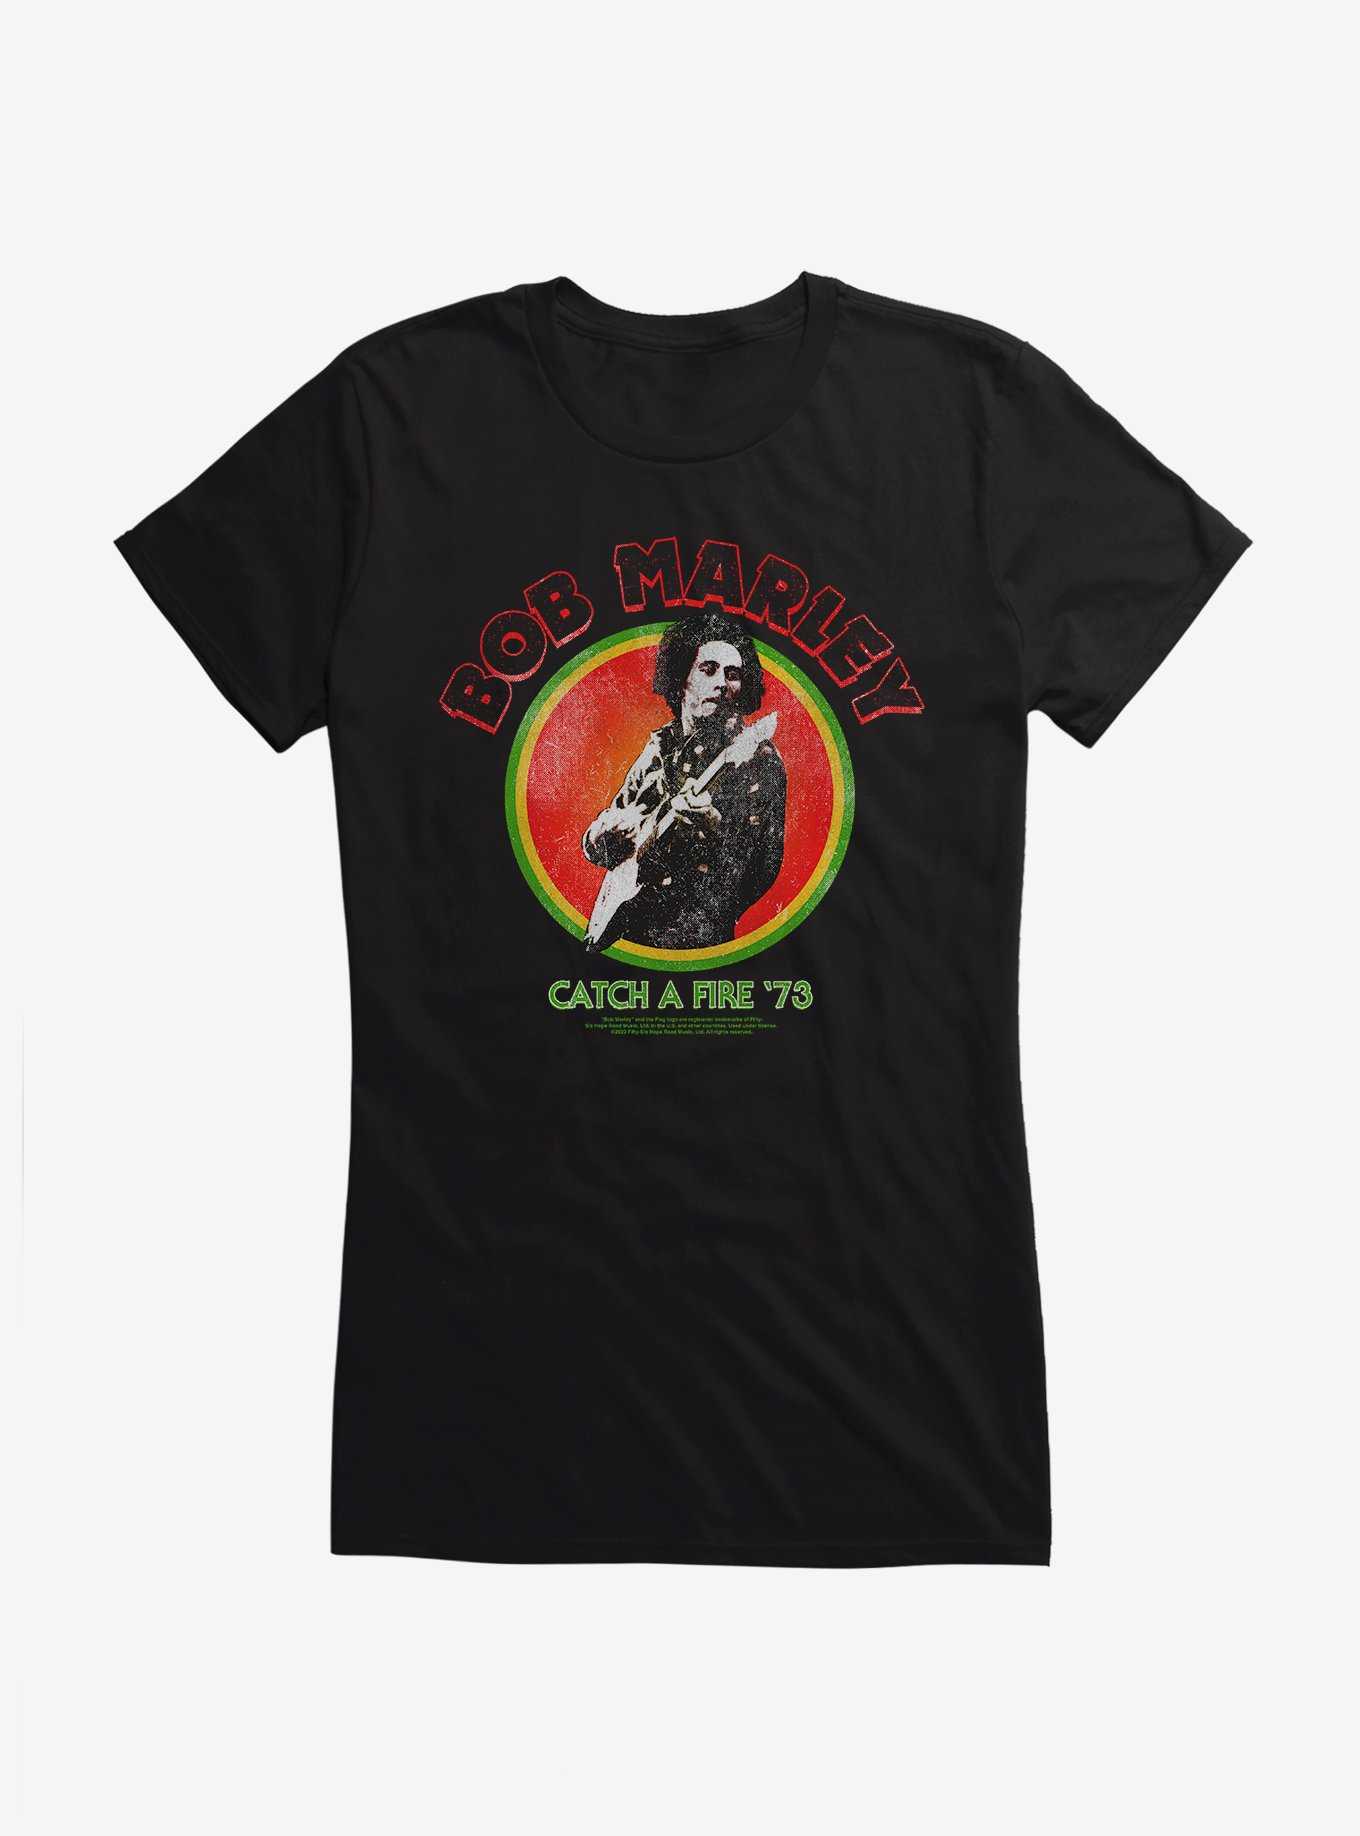 Bob Marley Catch A Fire '73 Girls T-Shirt, , hi-res